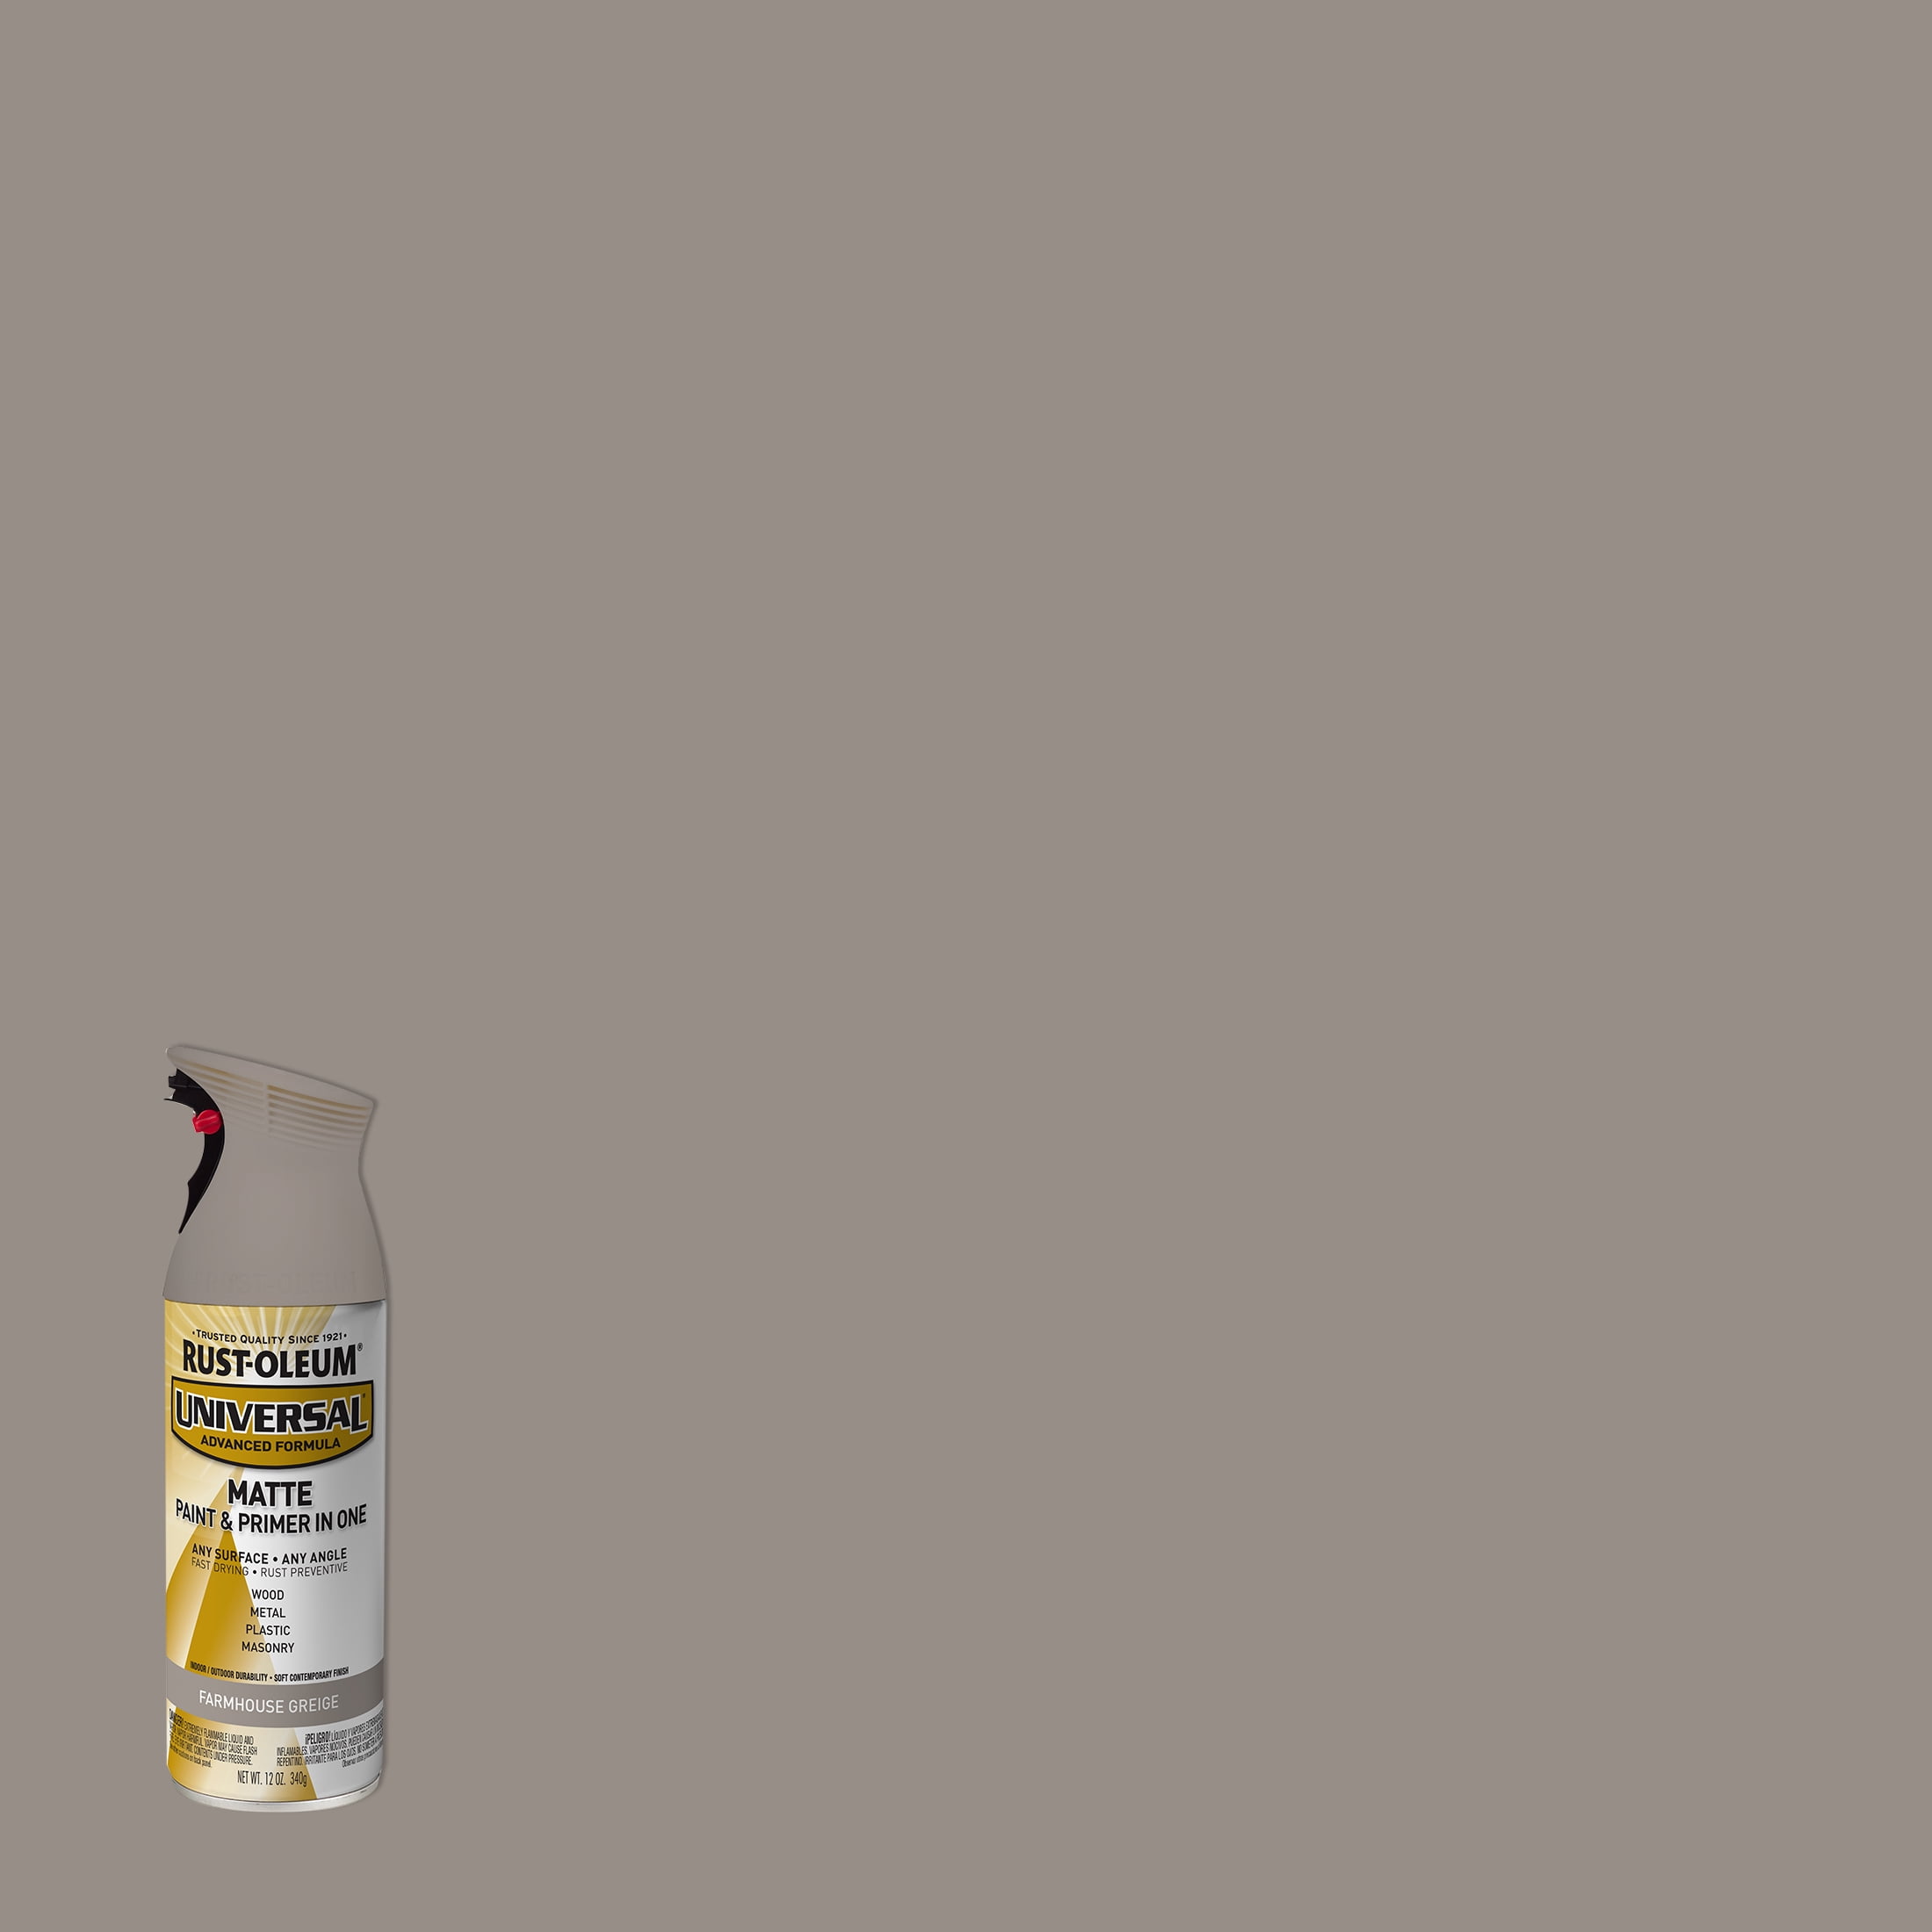 Rust-Oleum 245220 Universal Metallic Spray Paint, 12 oz, Gold Metallic